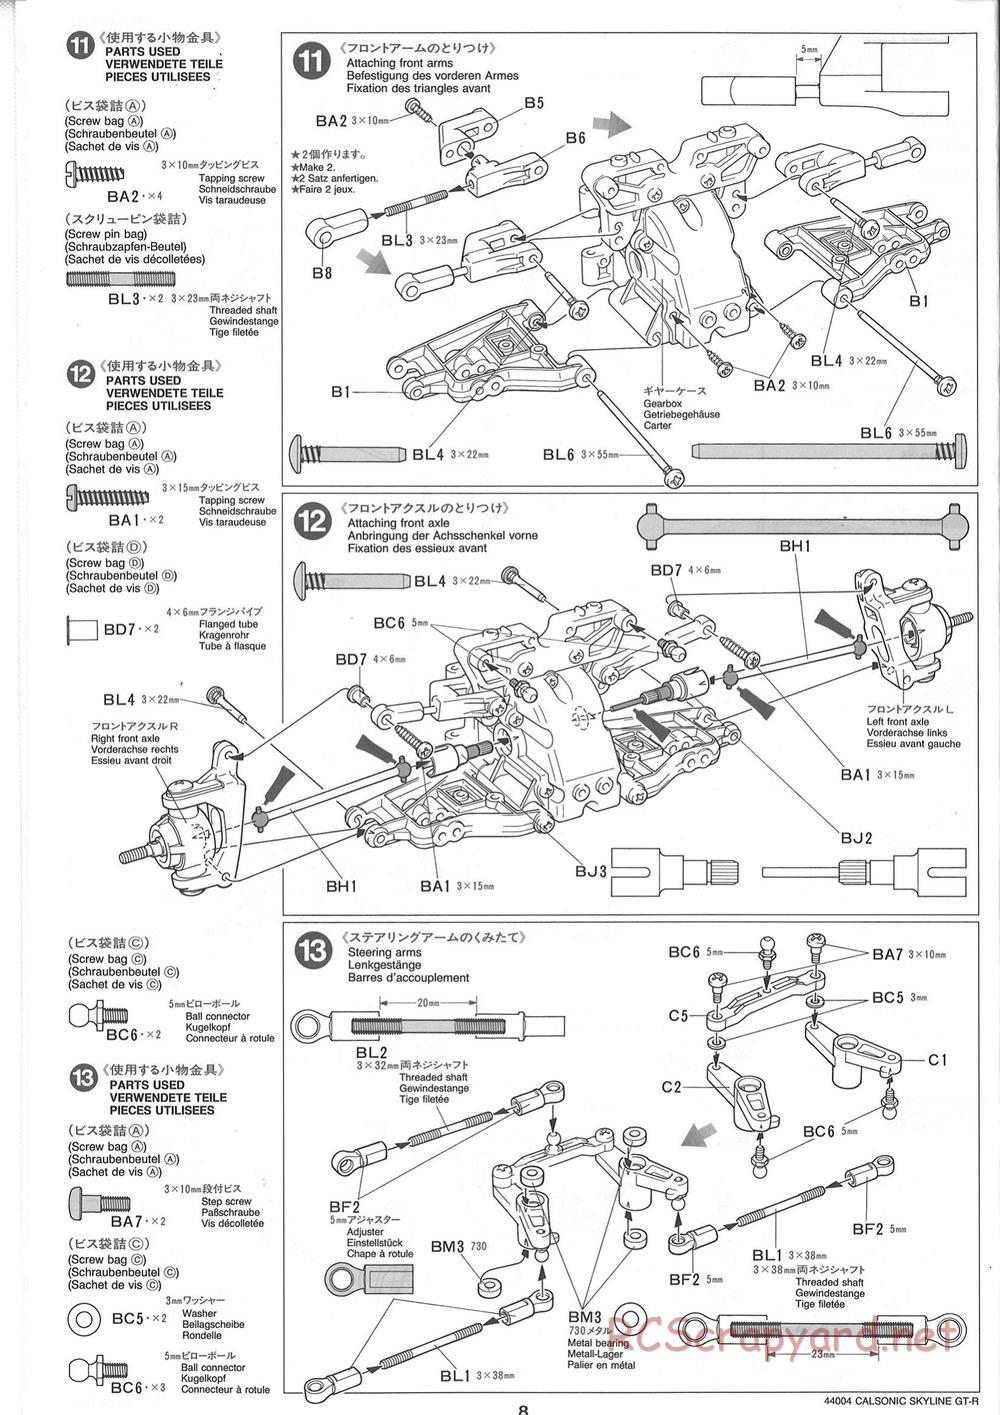 Tamiya - Calsonic GT-R - TGX Mk.1 Chassis - Manual - Page 8